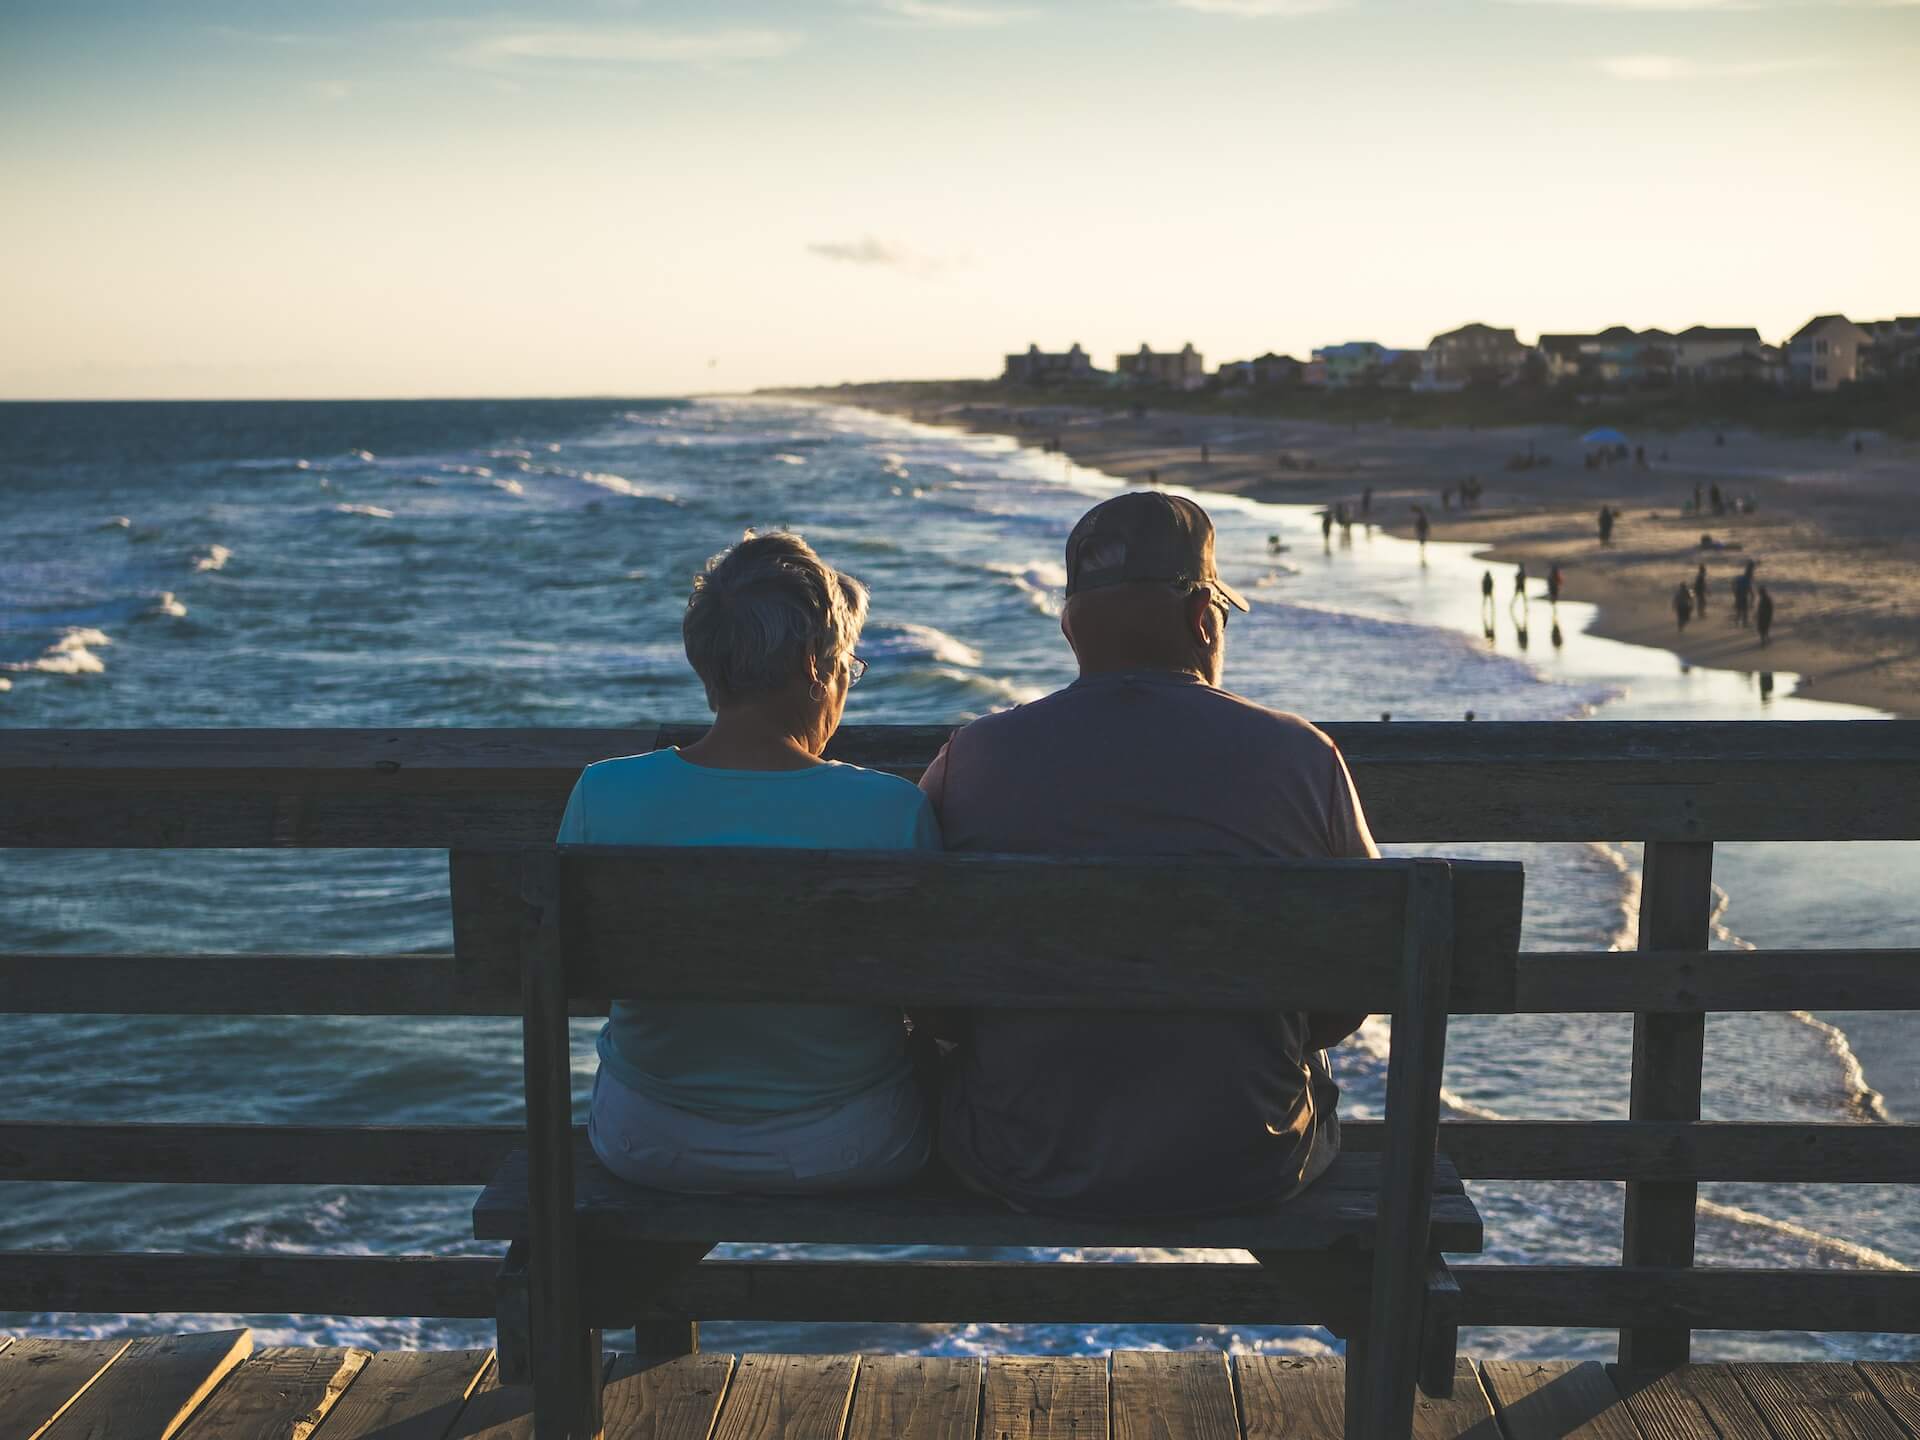 An elderly couple sat on a bench